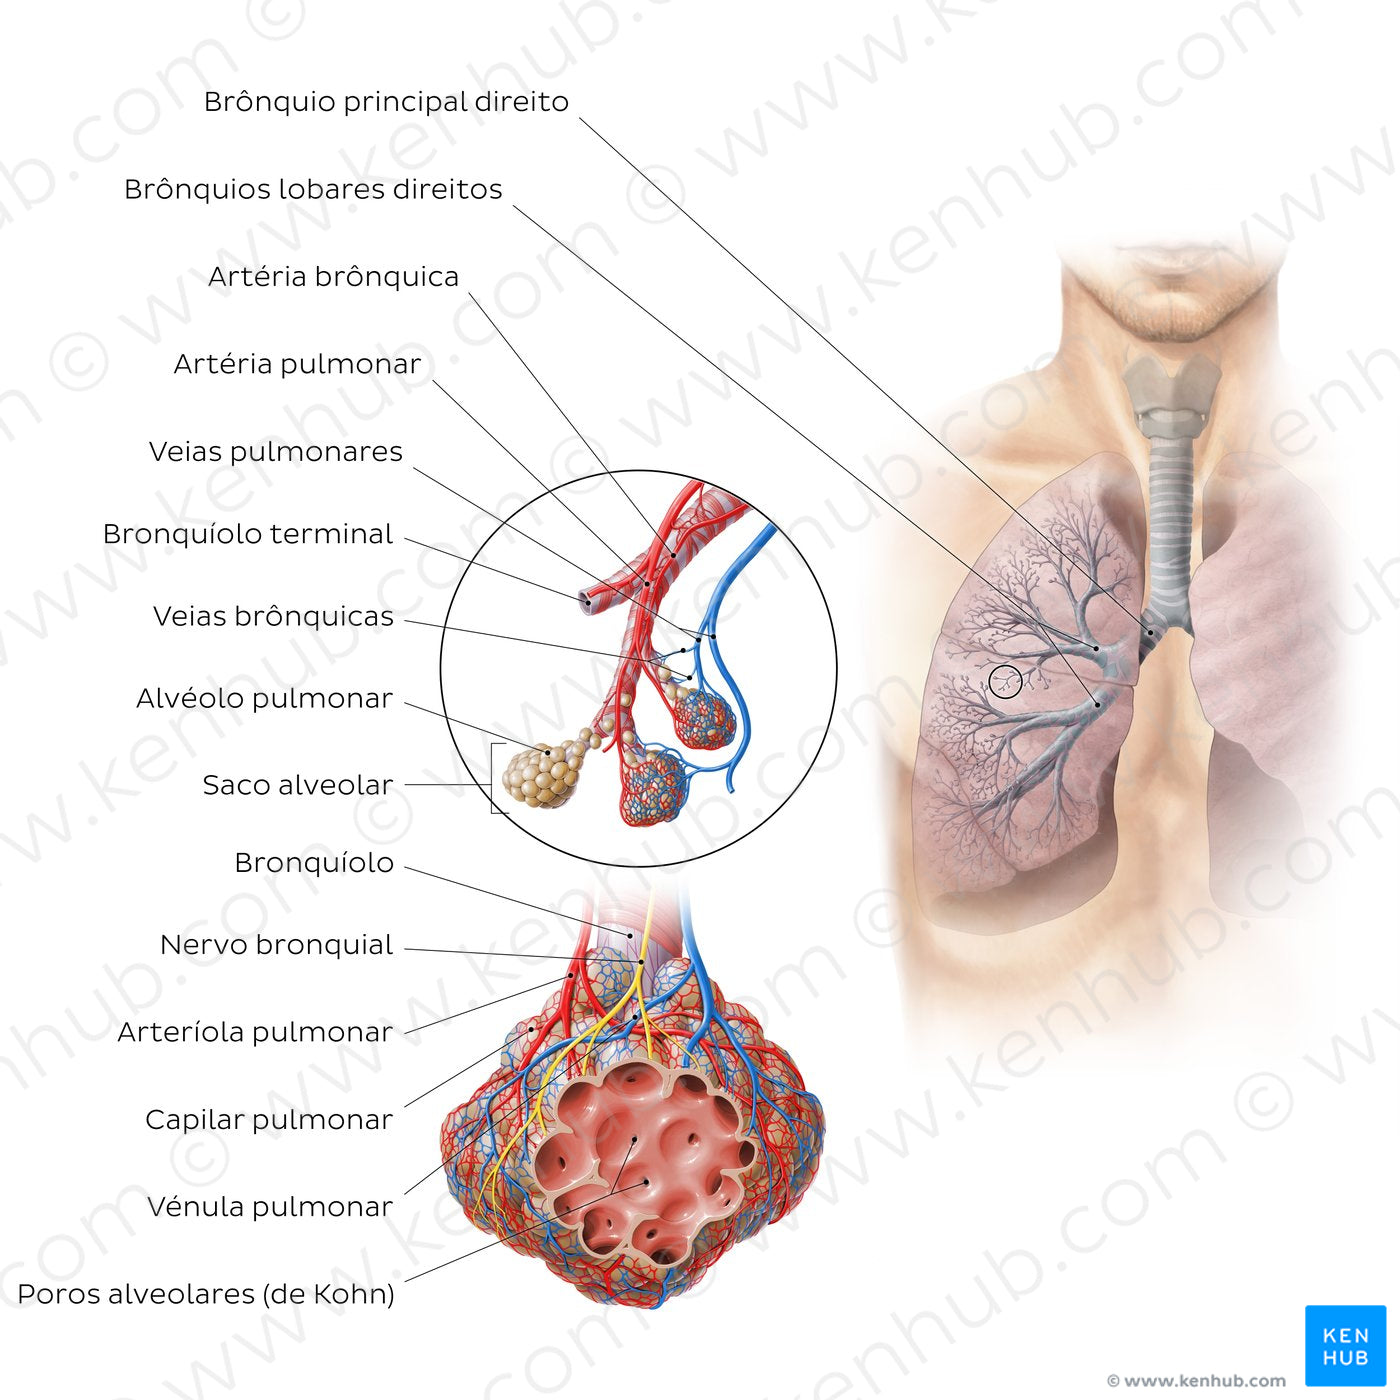 Bronchioles and alveoli (Portuguese)